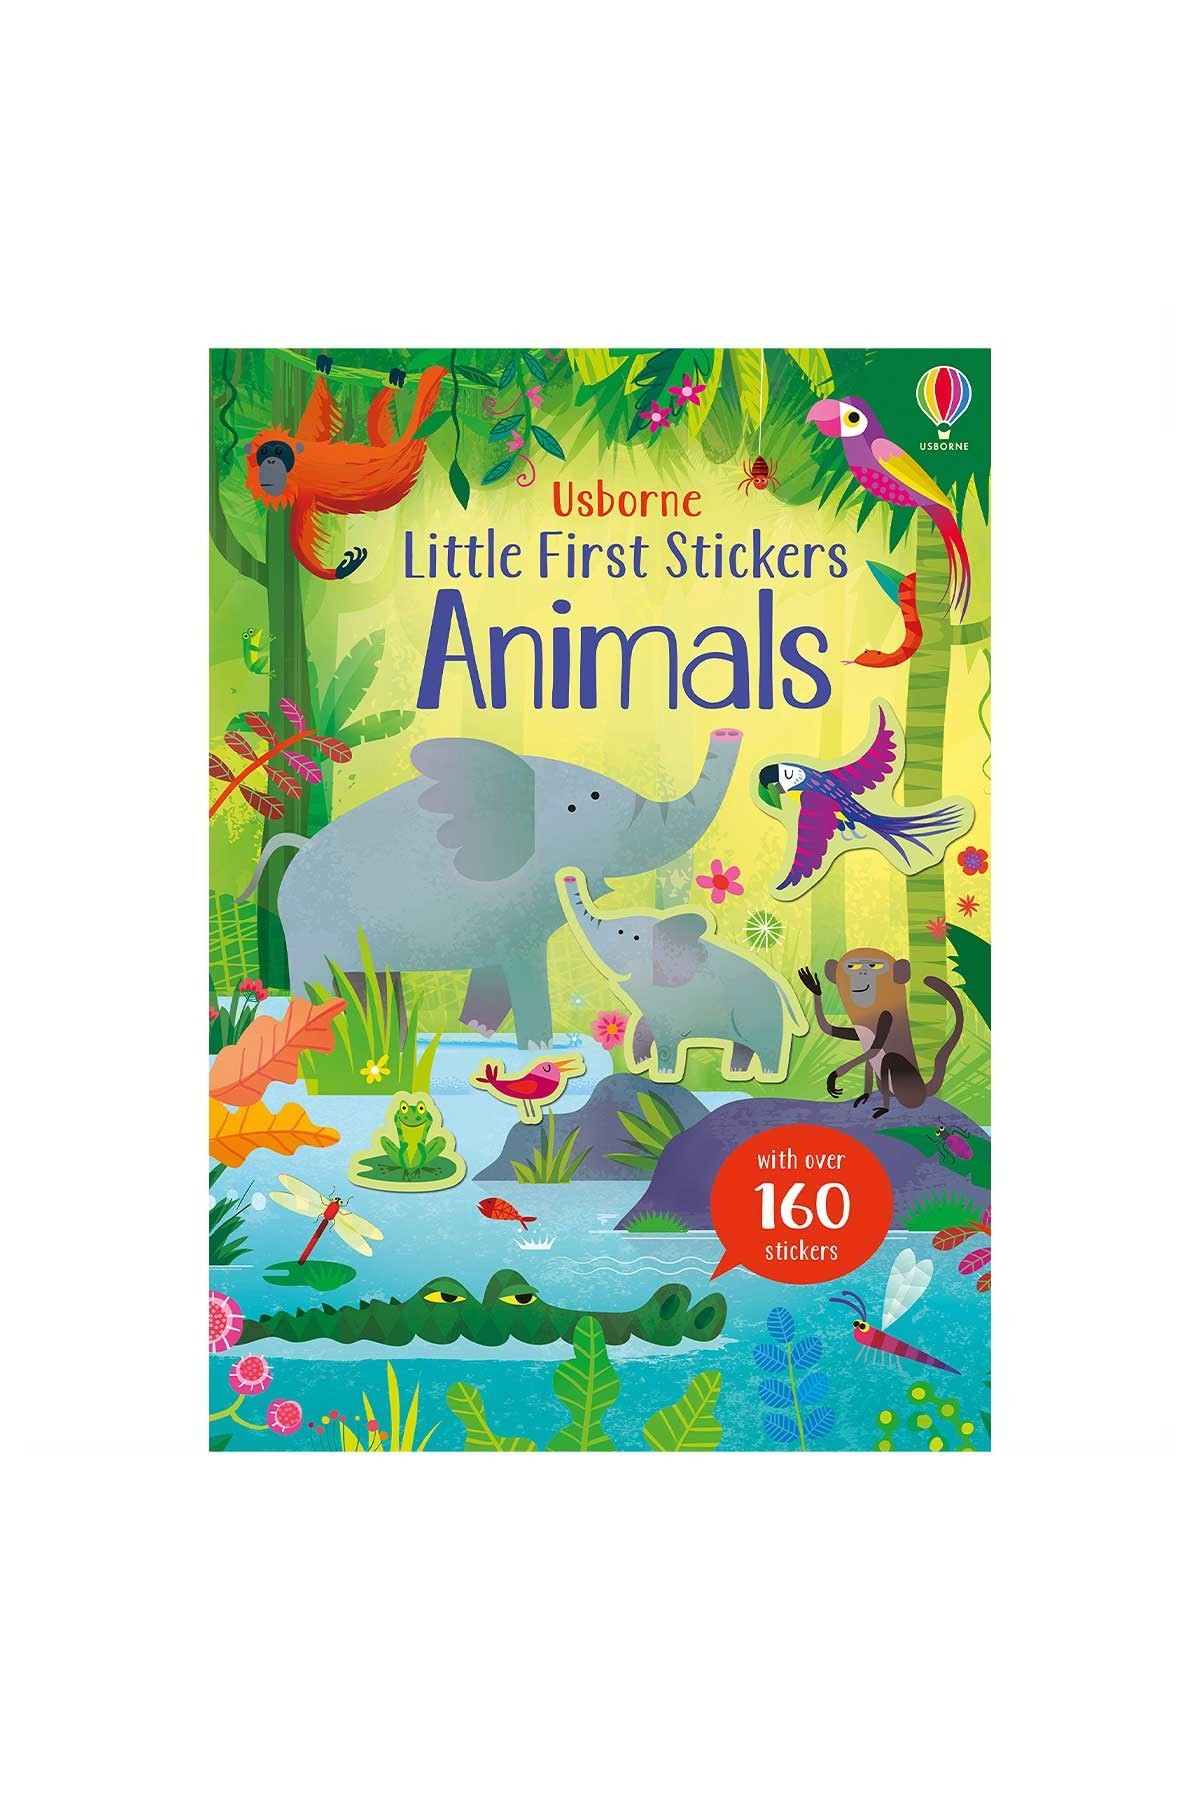 The Usborne Little First Stickers Animals